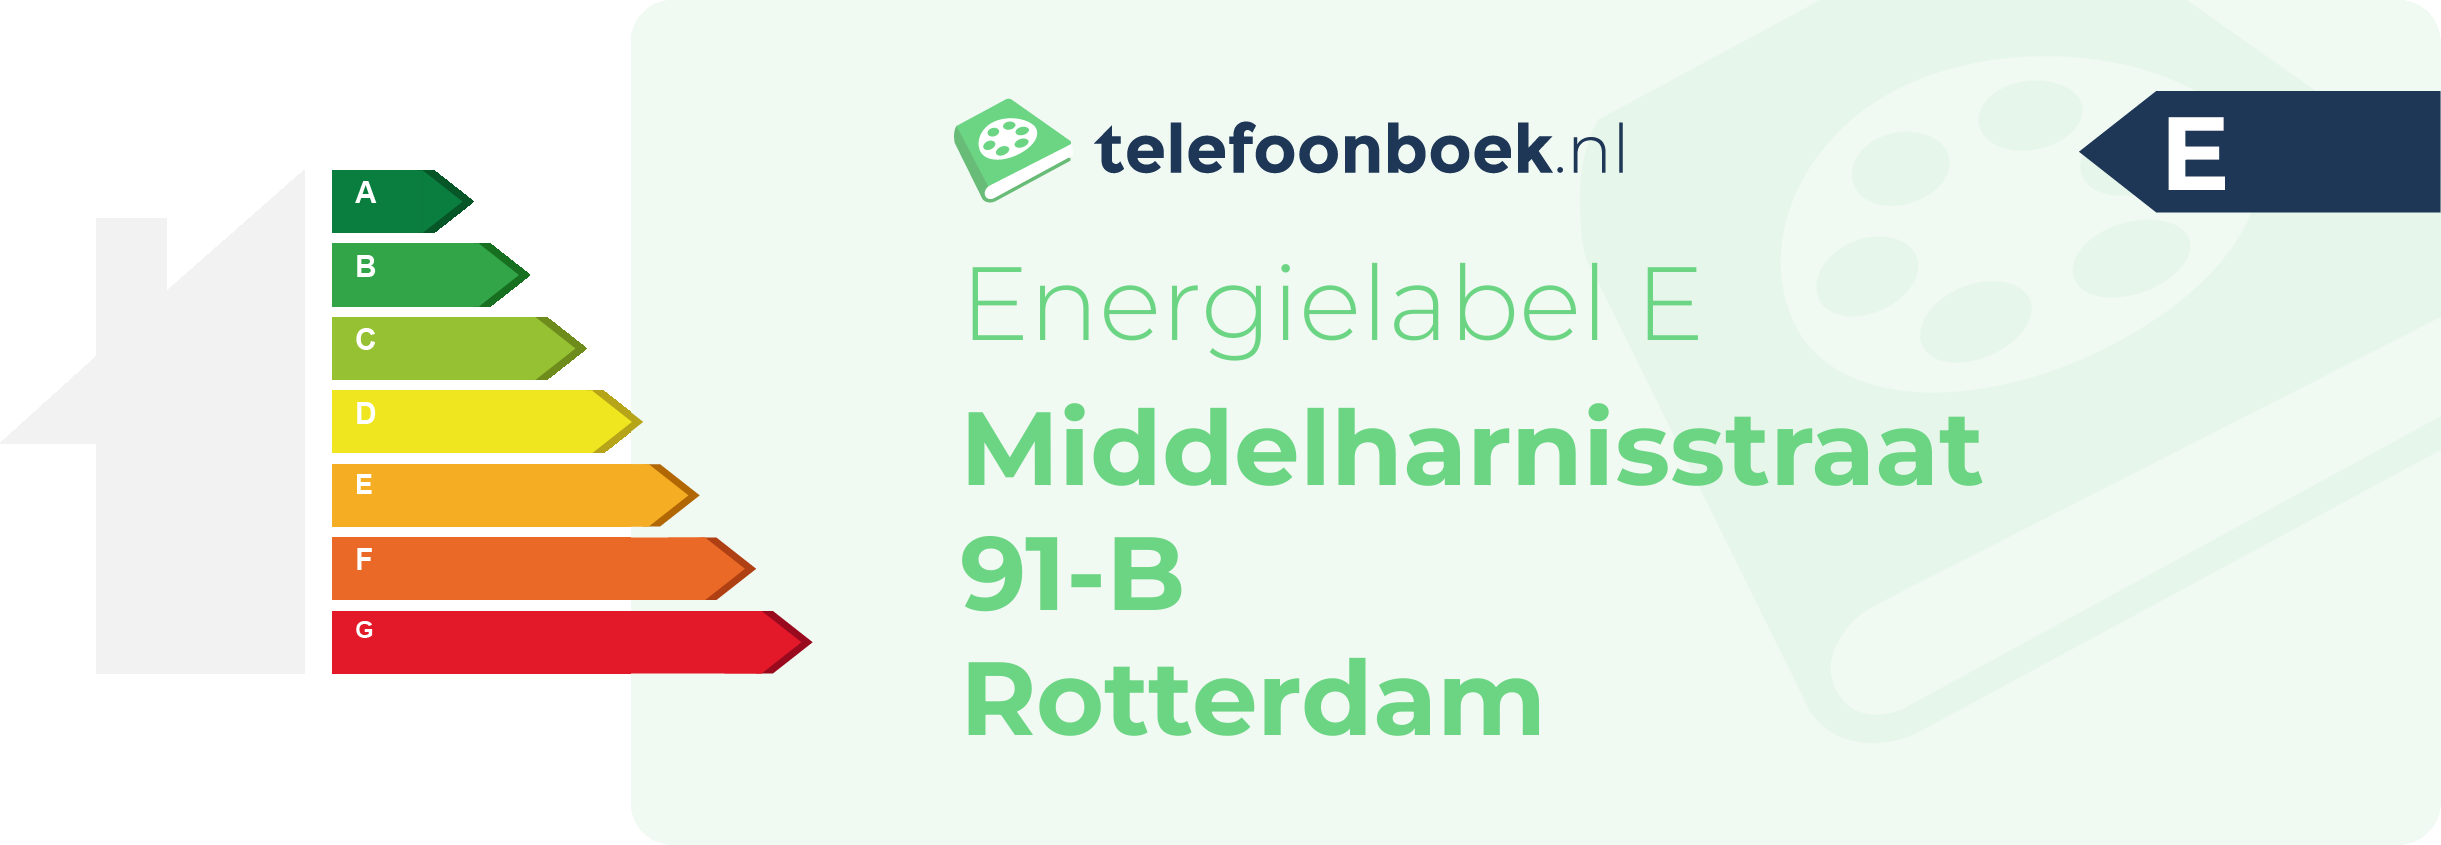 Energielabel Middelharnisstraat 91-B Rotterdam